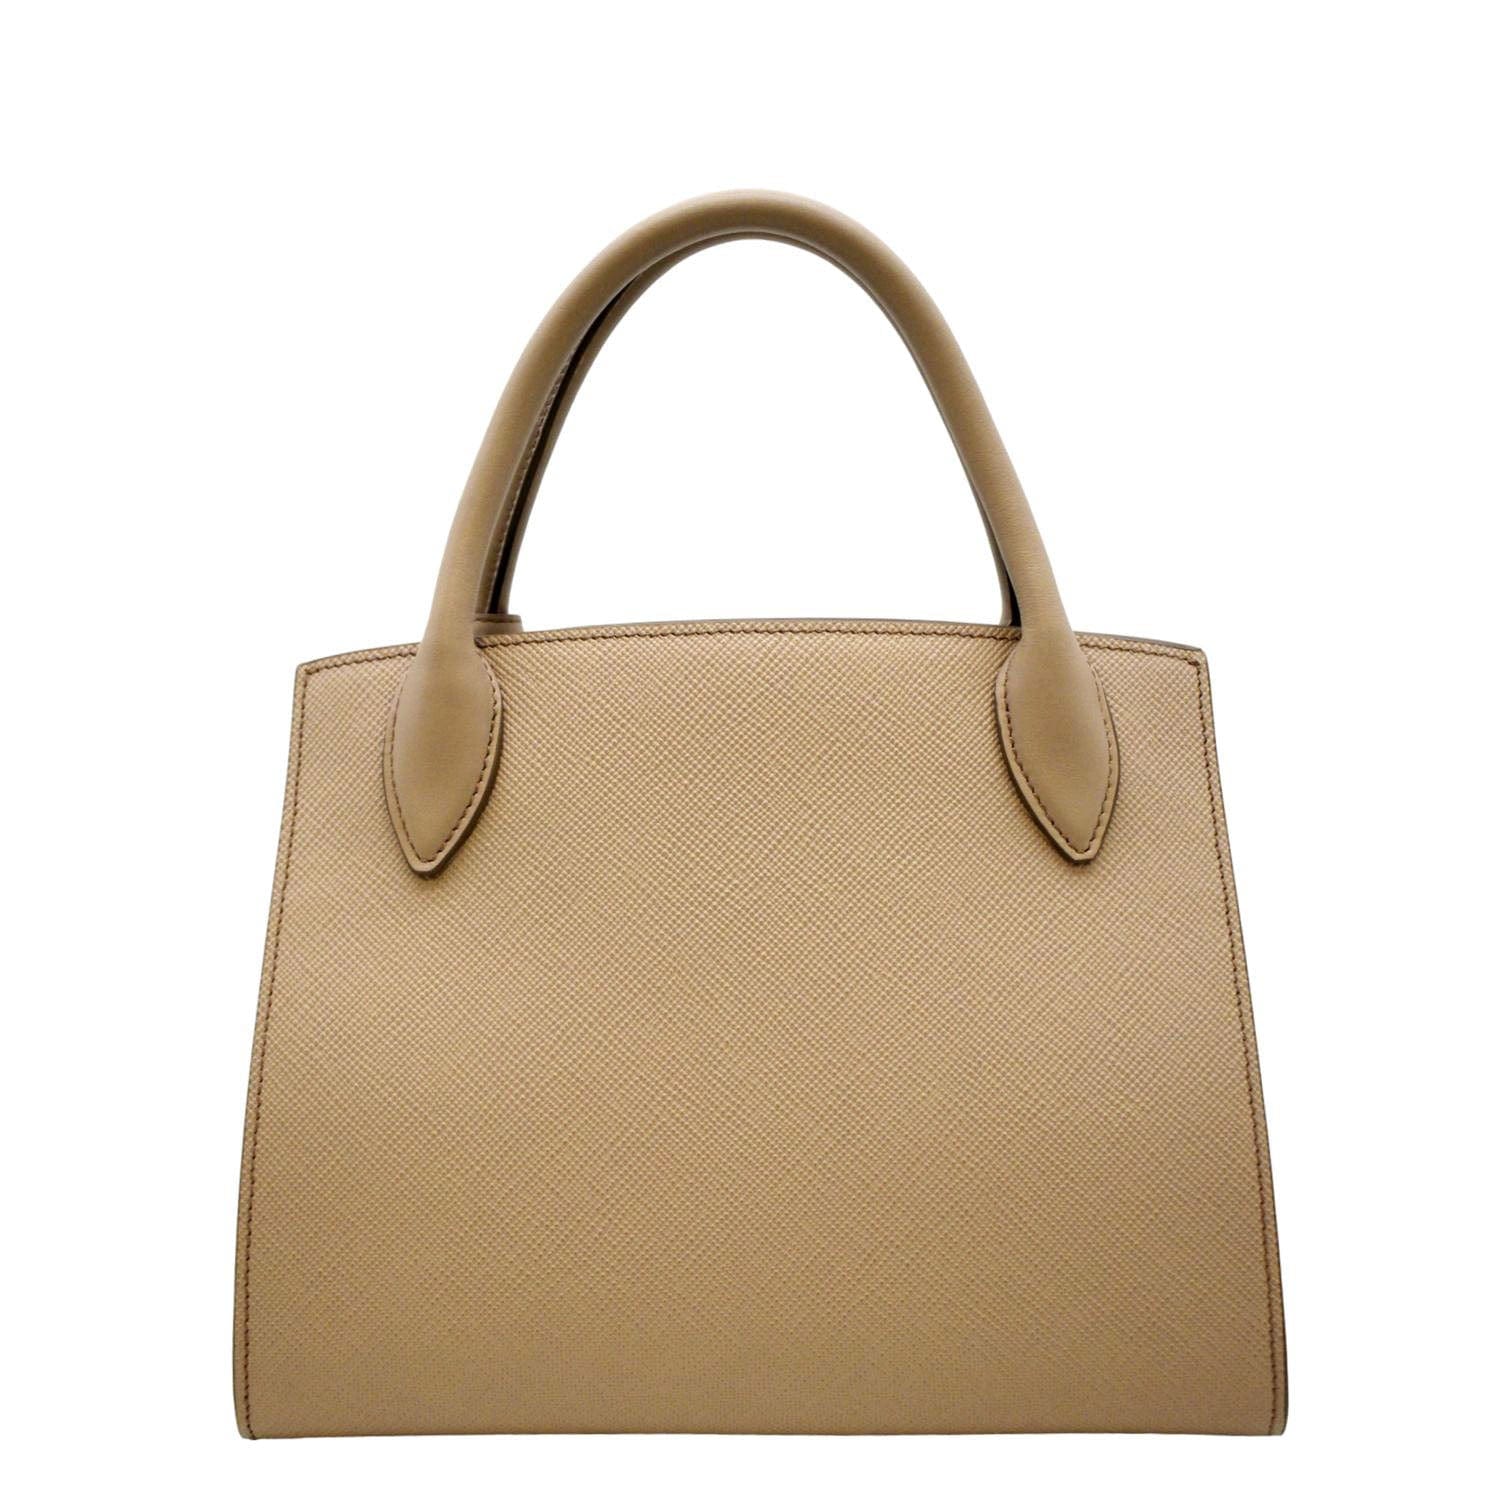 Prada Monochrome Flap Bags In White Saffiano Leather On Sale